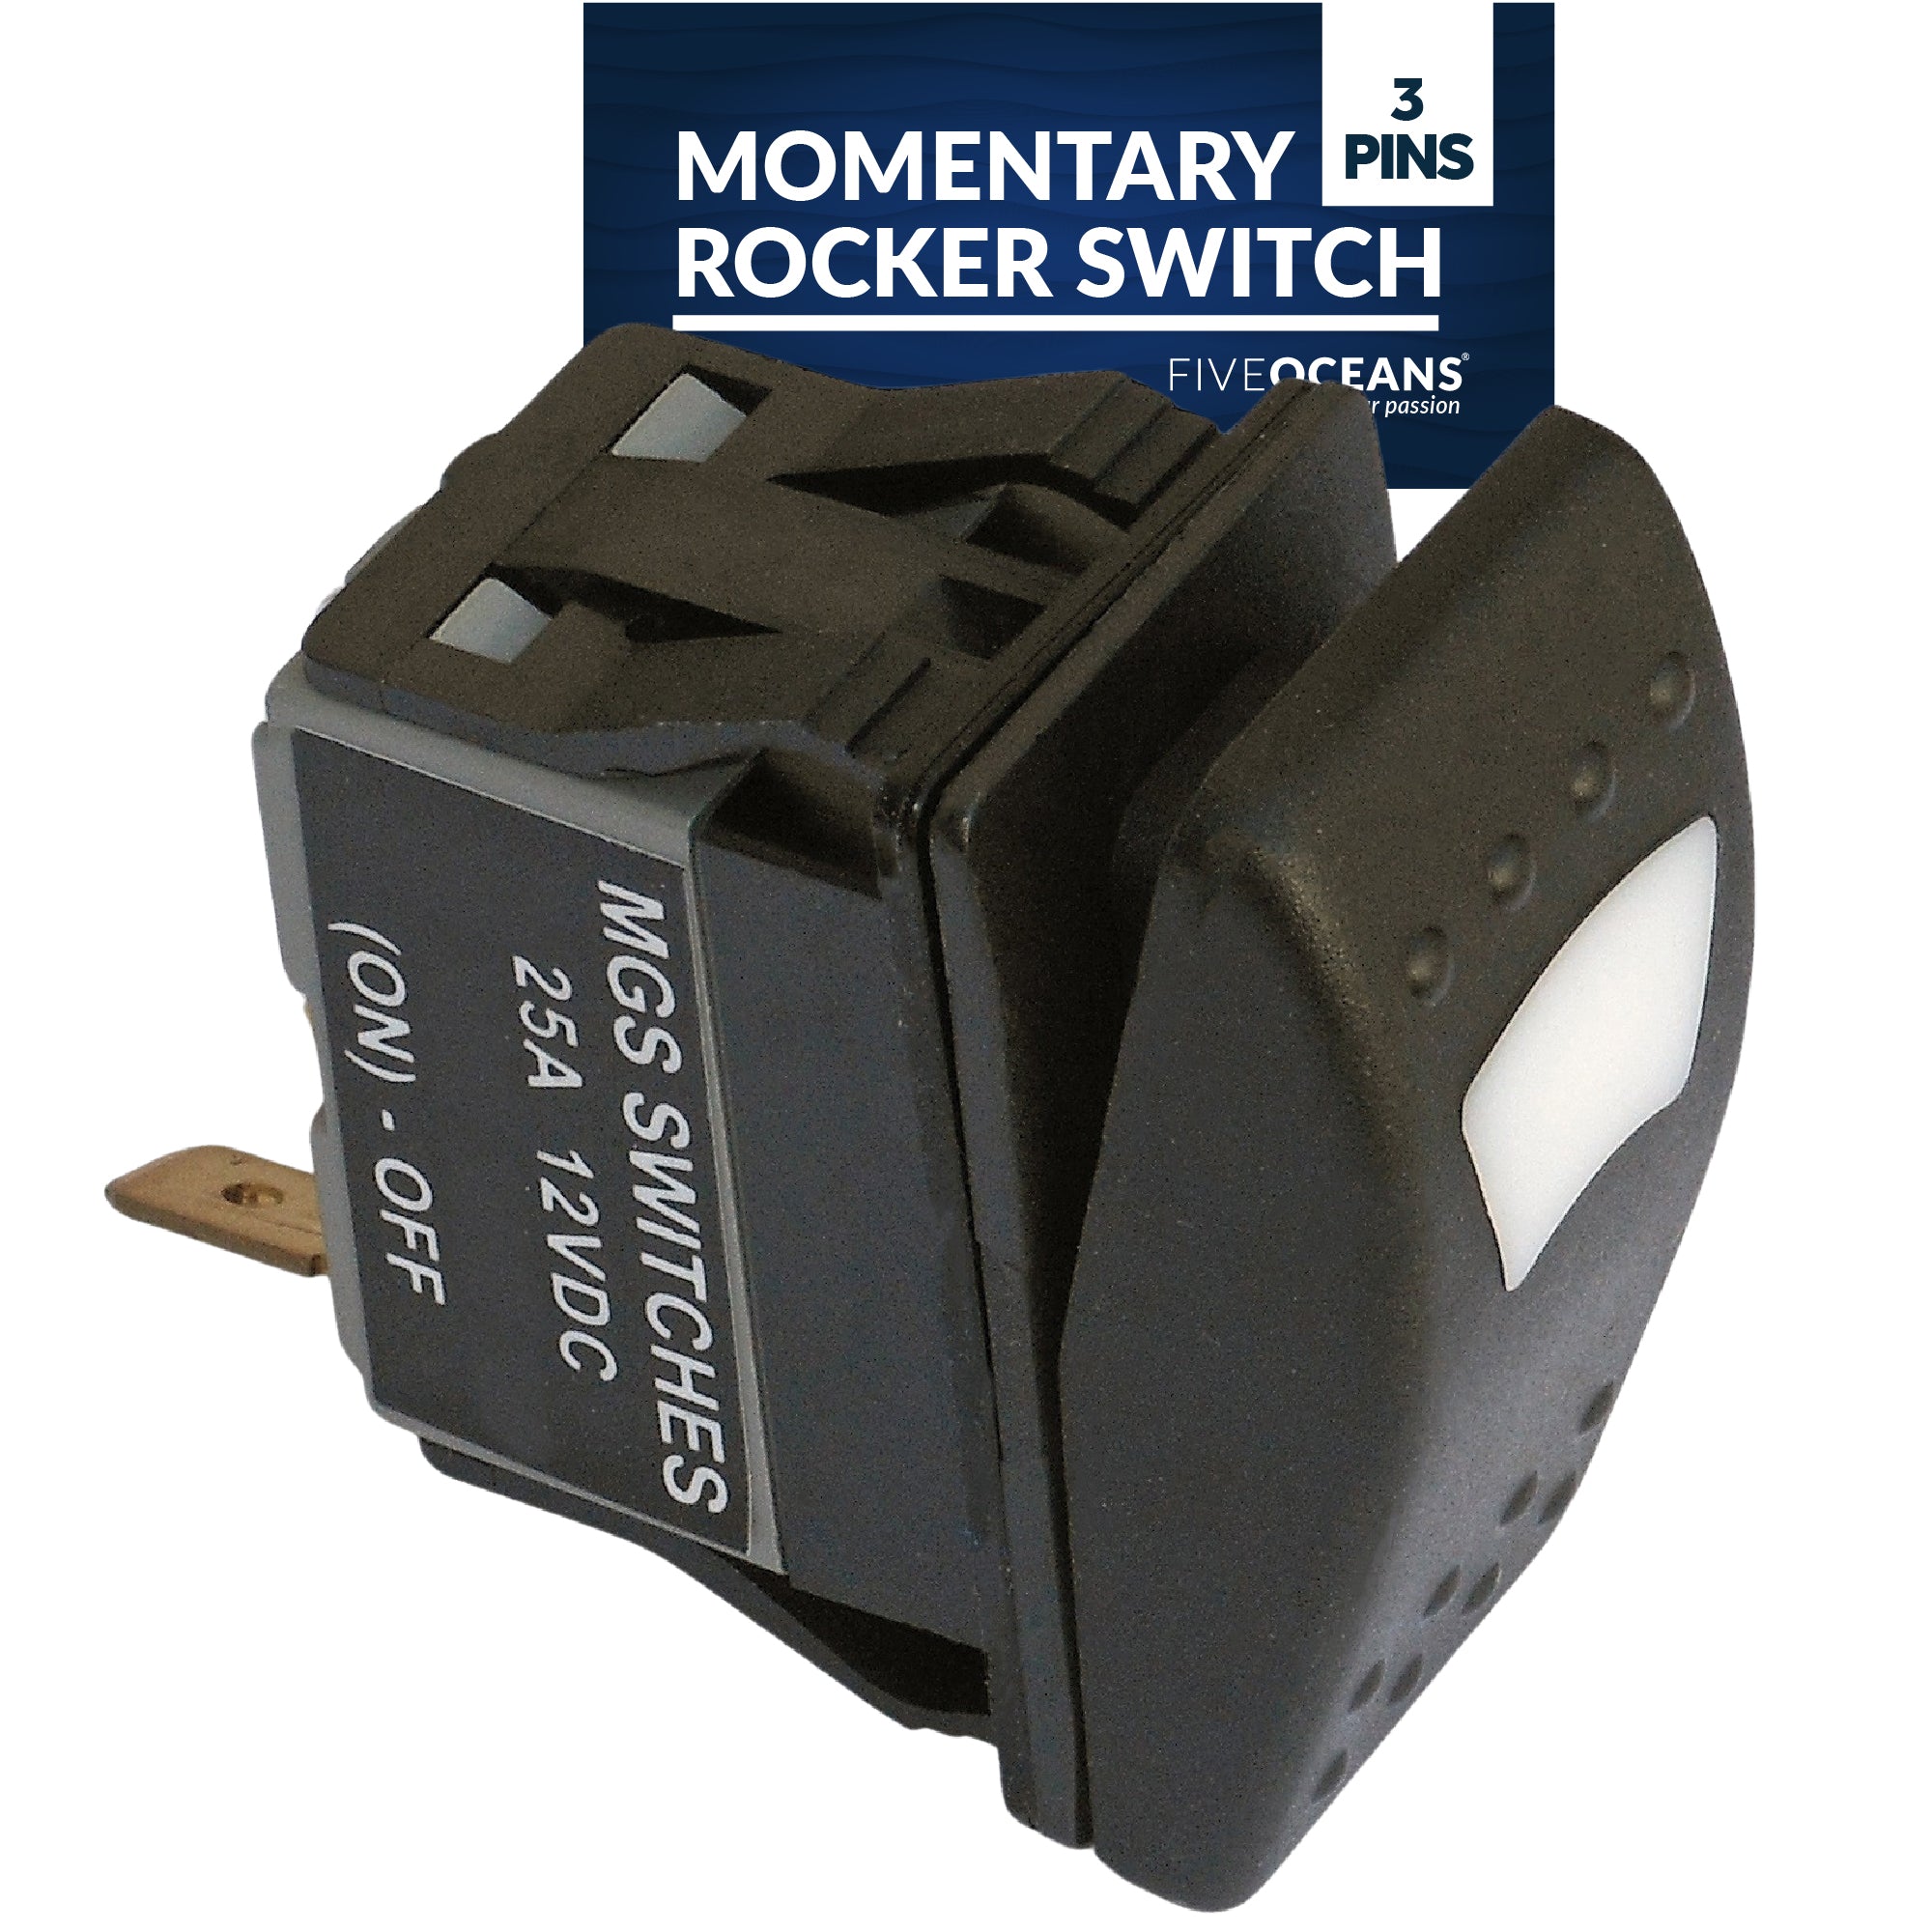 Momentary Rocker Switch, 3 Pins - FO3016